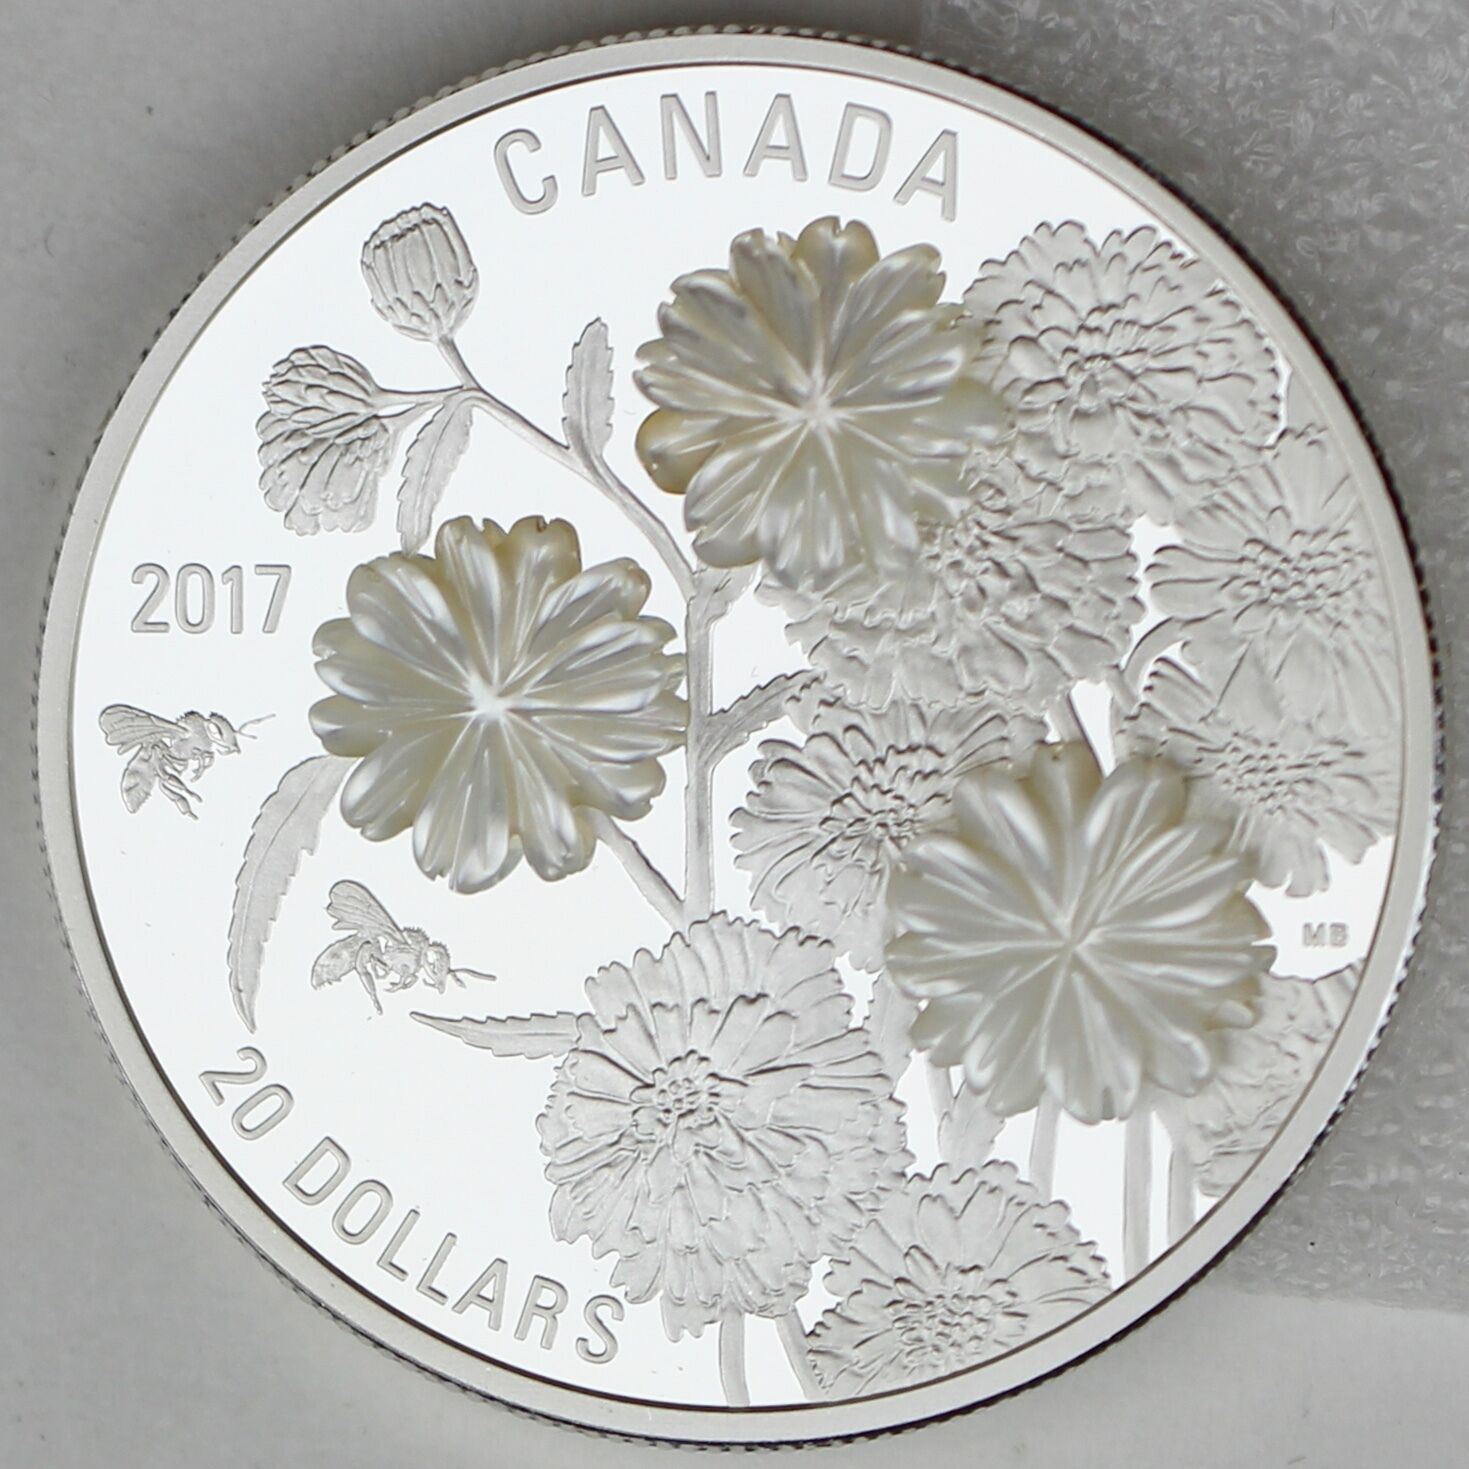 Canada Flowers Coin.jpg